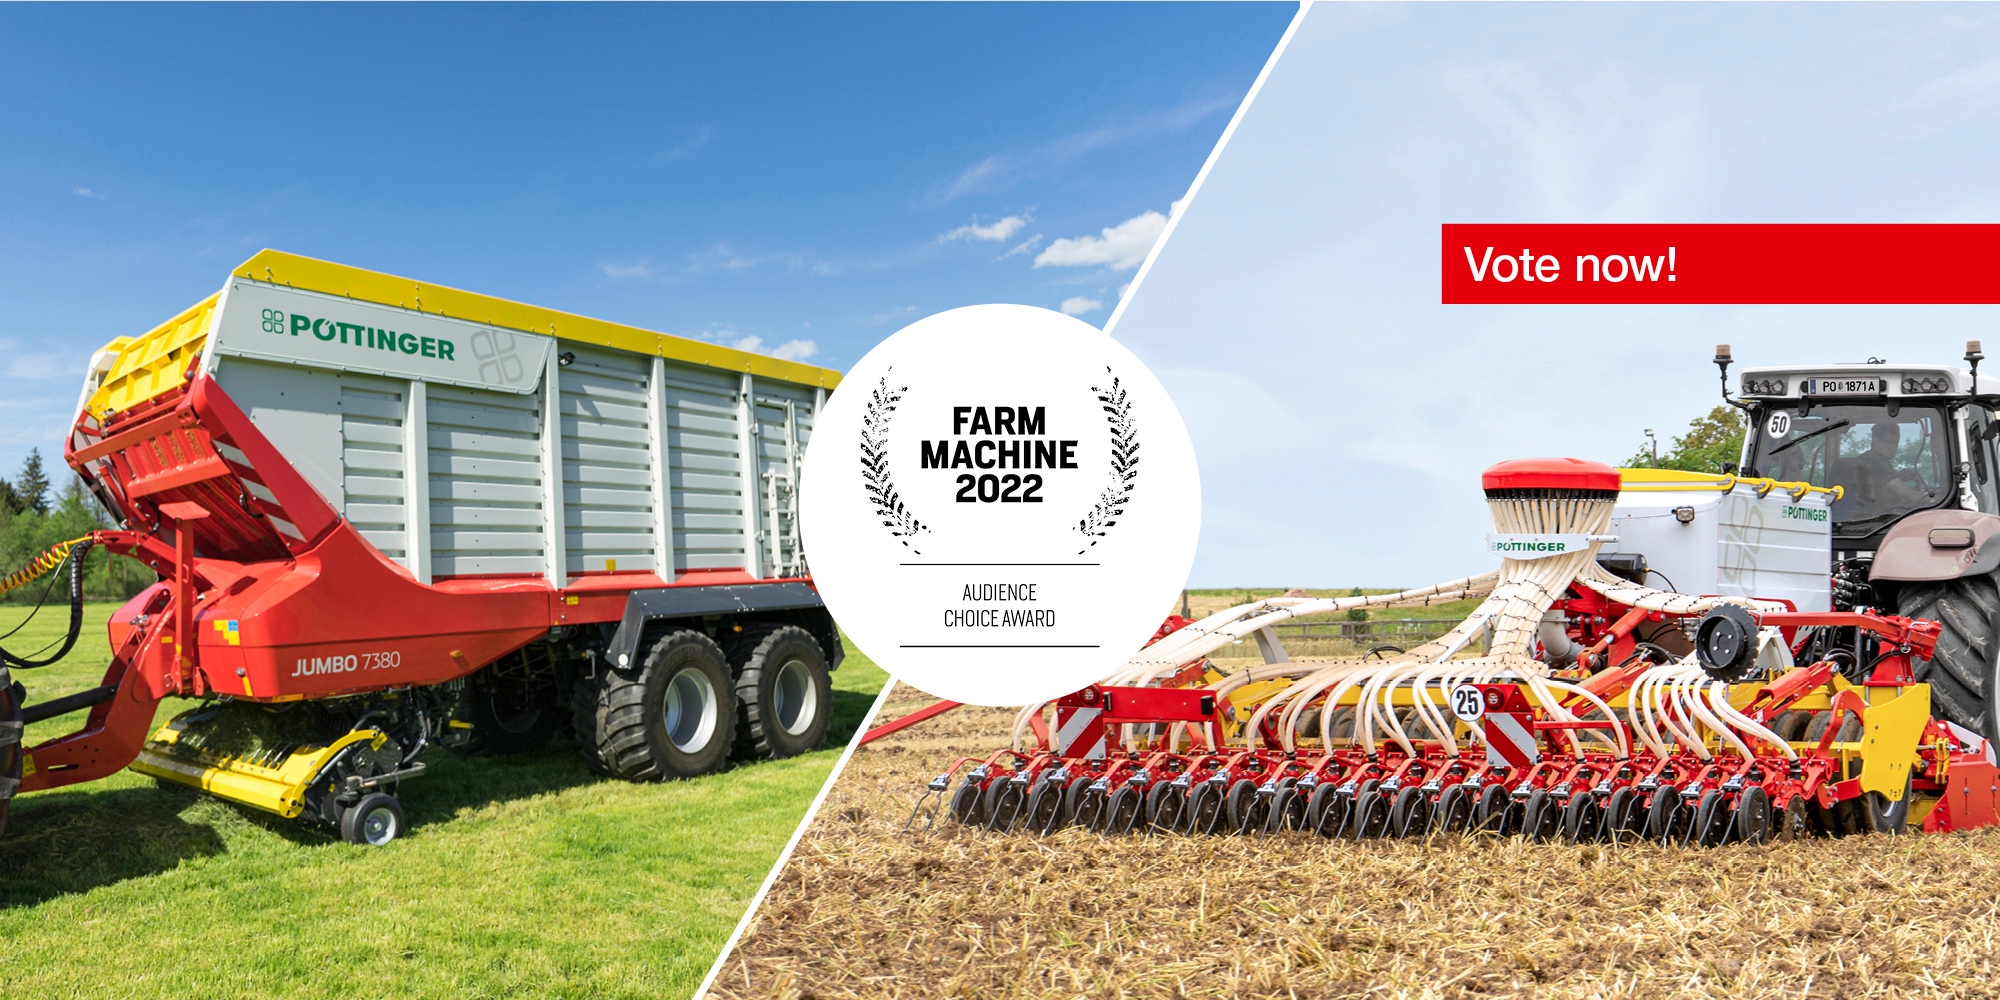 Farm Machine 2022: Your vote counts! 